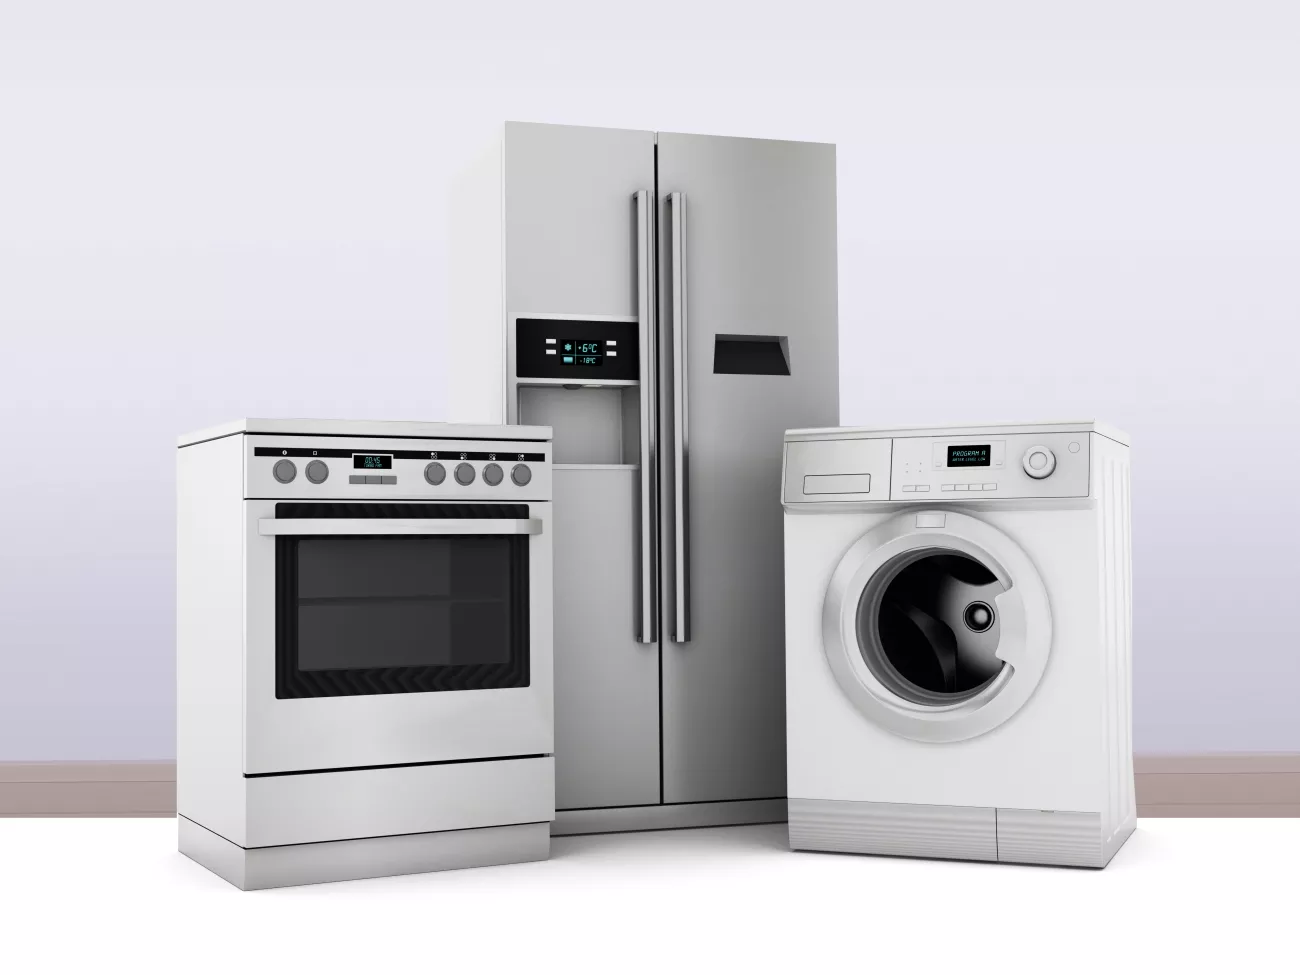 fridge, oven and laundry machine